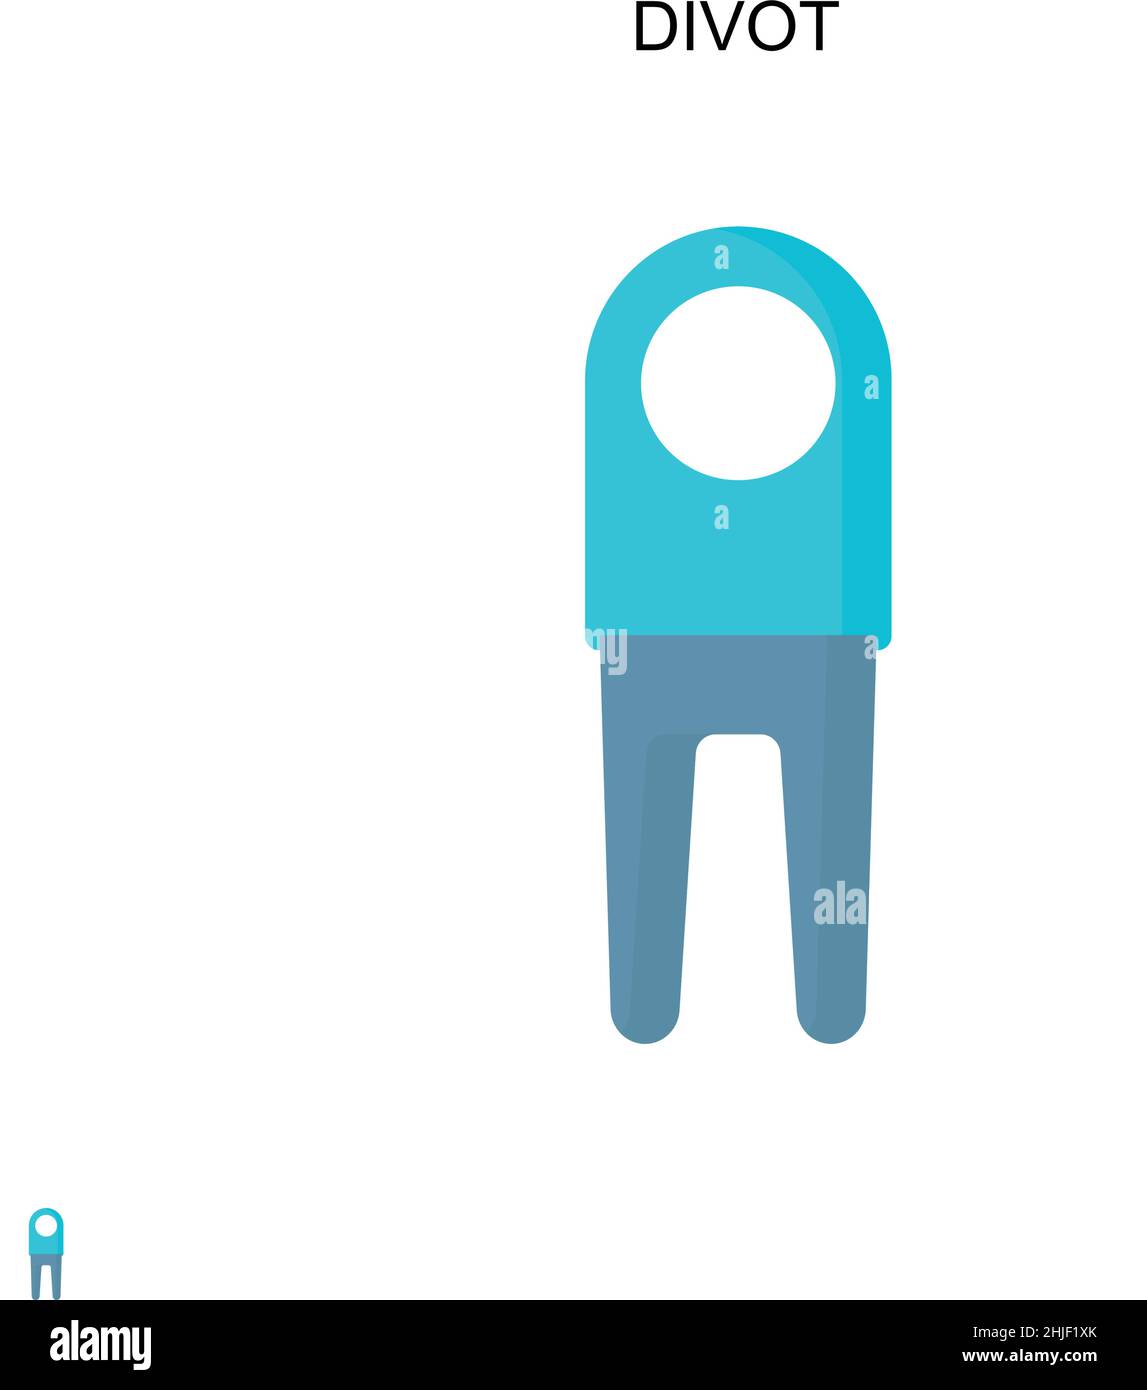 Einfaches Vektorsymbol „Divot“. Illustration Symbol Design-Vorlage für Web mobile UI-Element. Stock Vektor